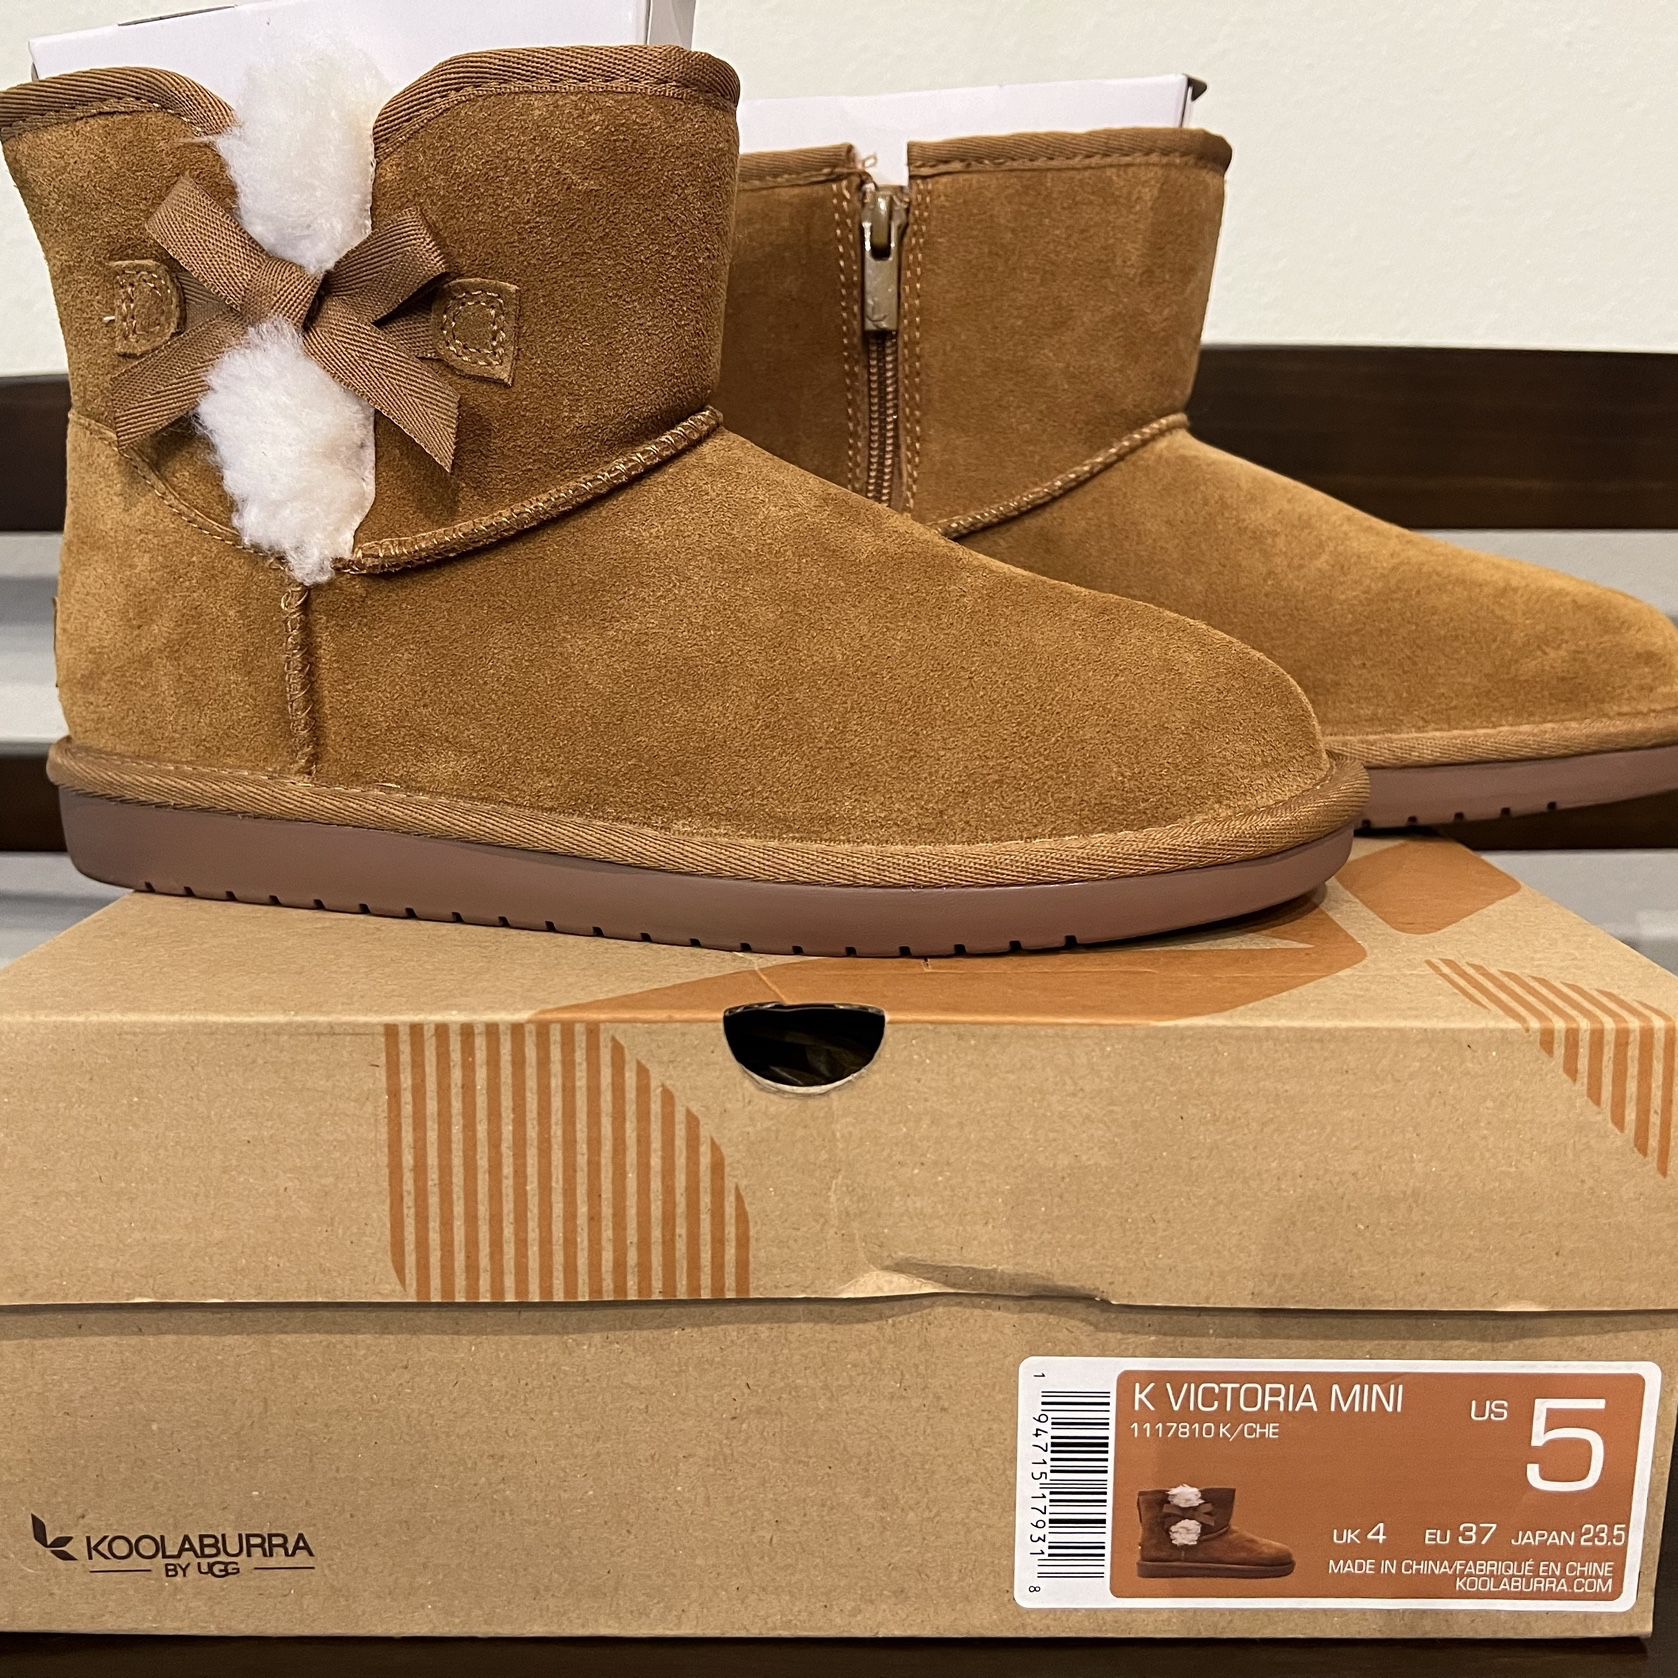 Brand New Koolaburra By Ugg Boots Size 5